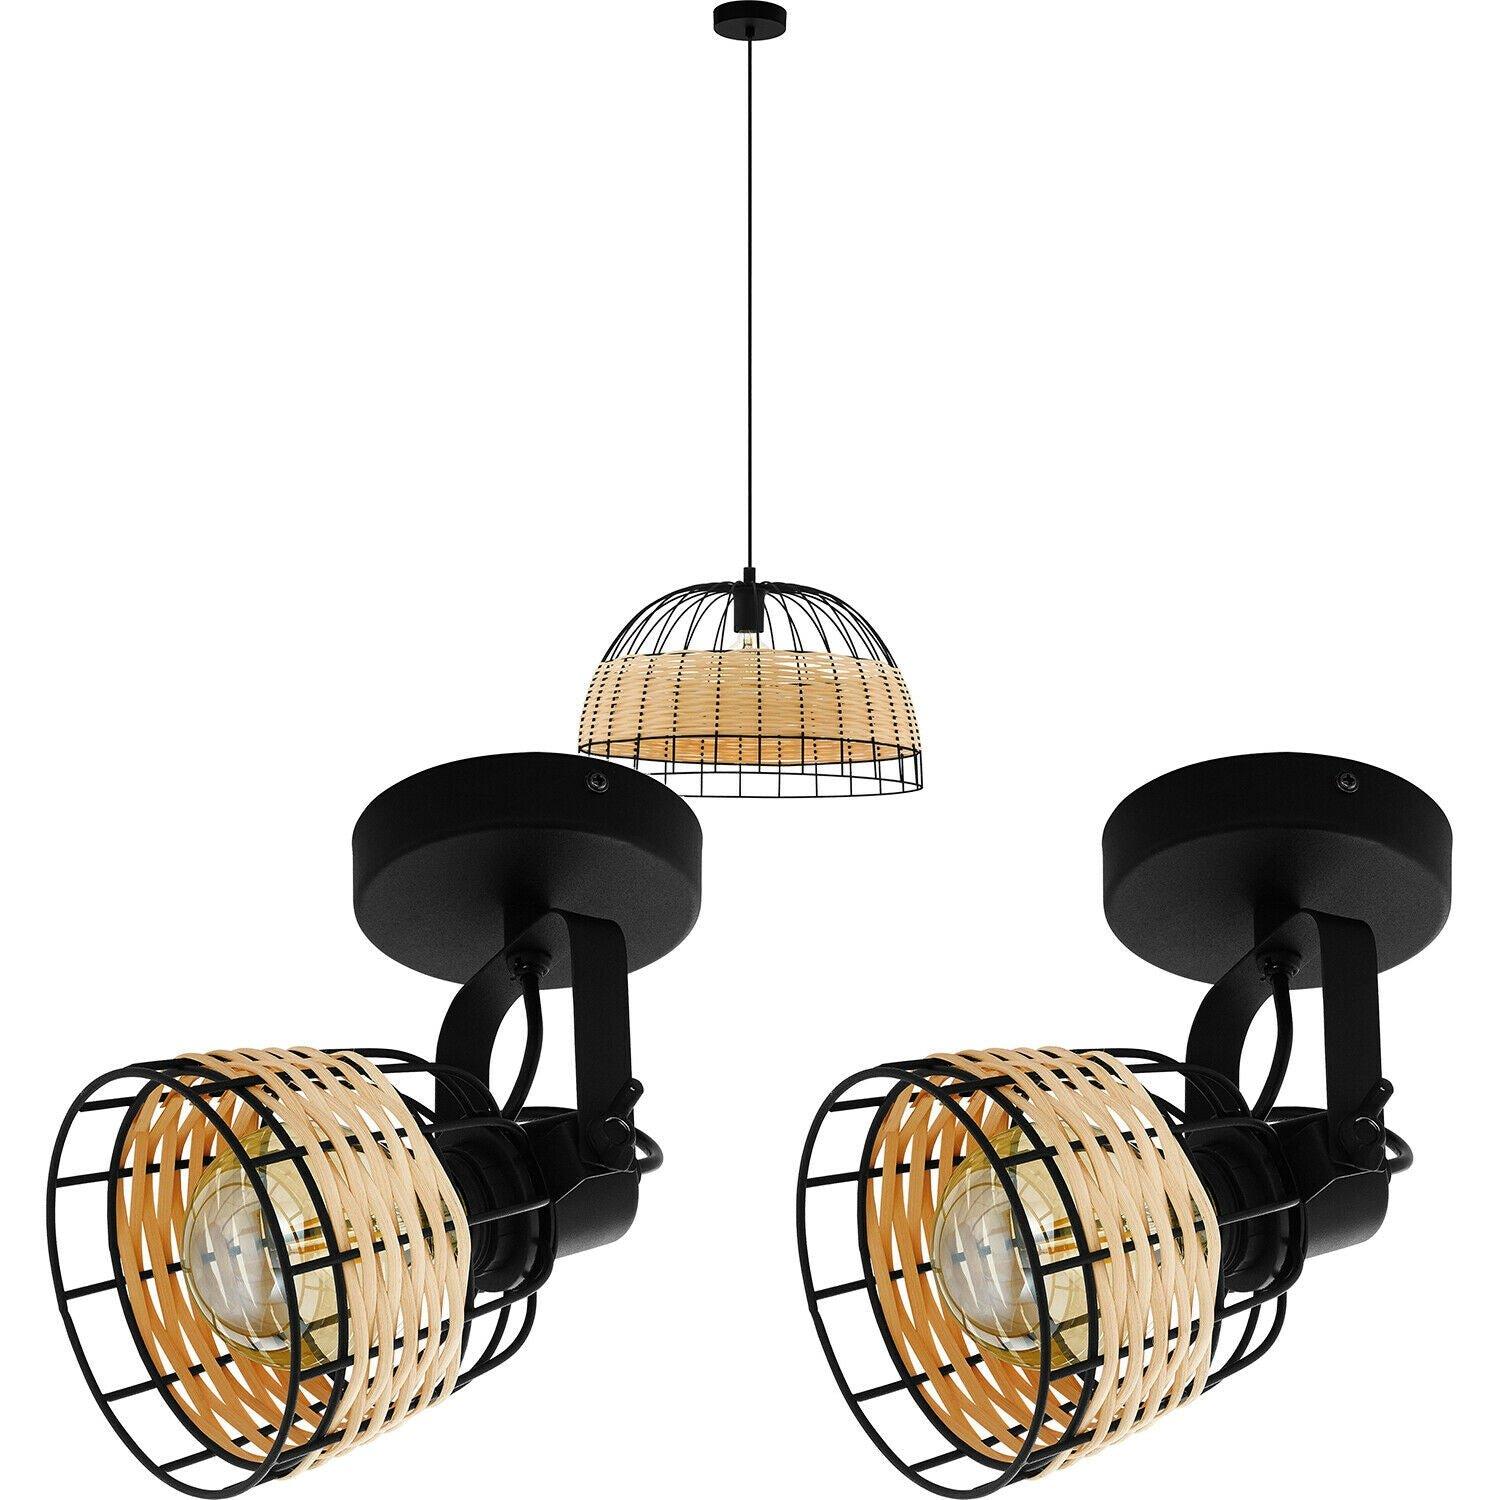 Ceiling Pendant Light & 2x Matching Wall Lights Black & Wicker Wood Shade